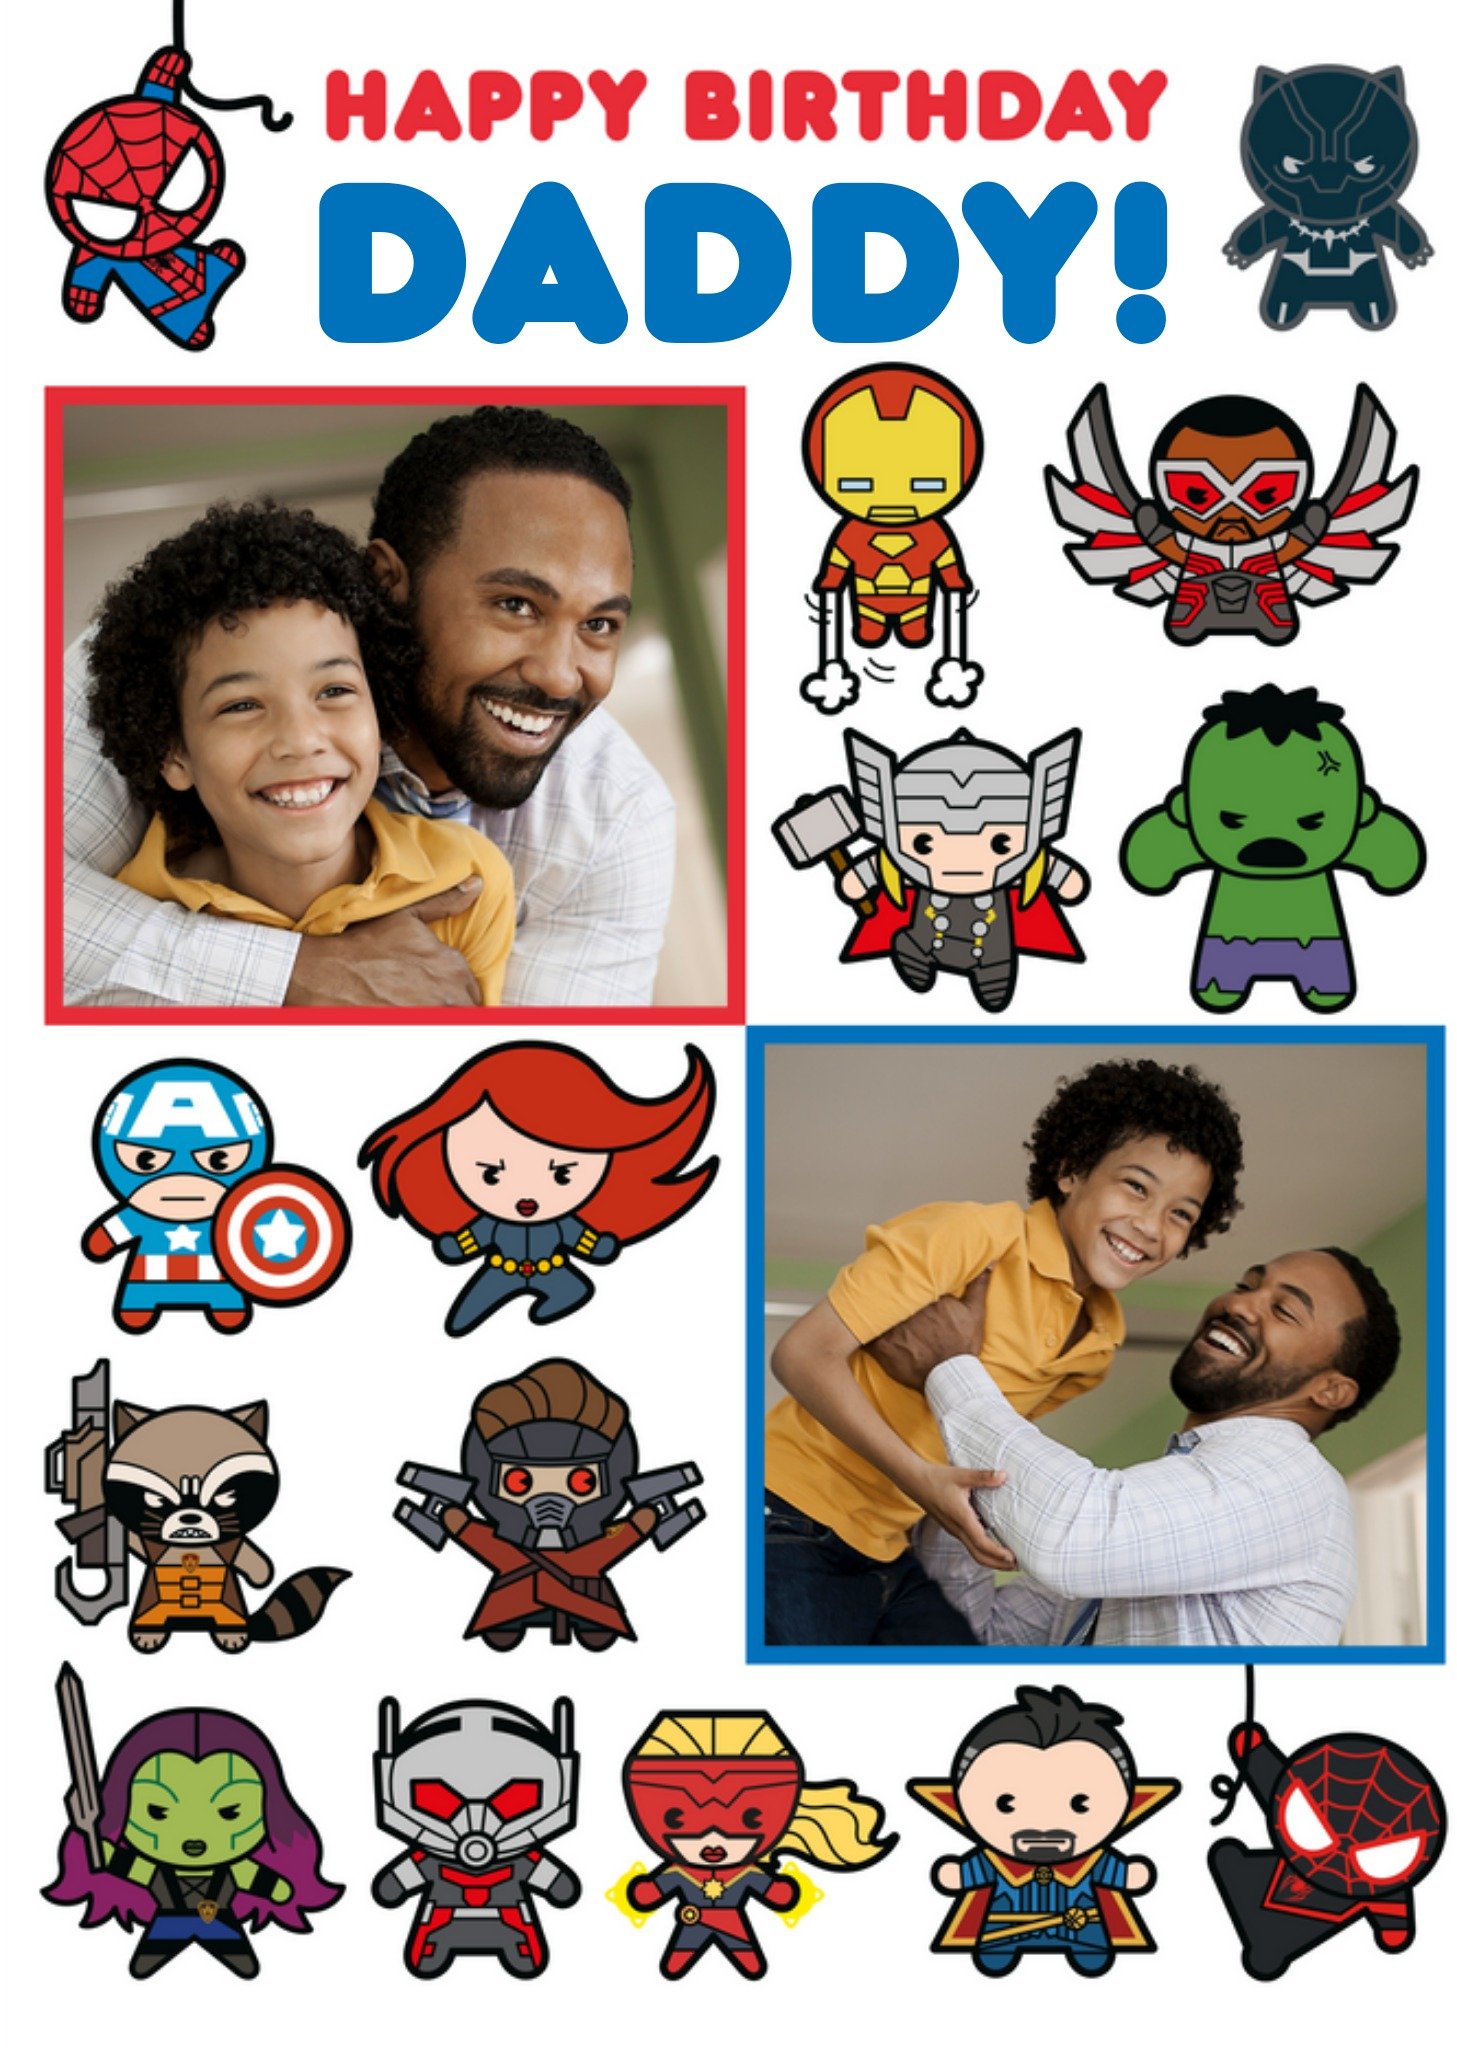 Disney Marvel Comics Heroes Happy Birthday Daddy Card, Large